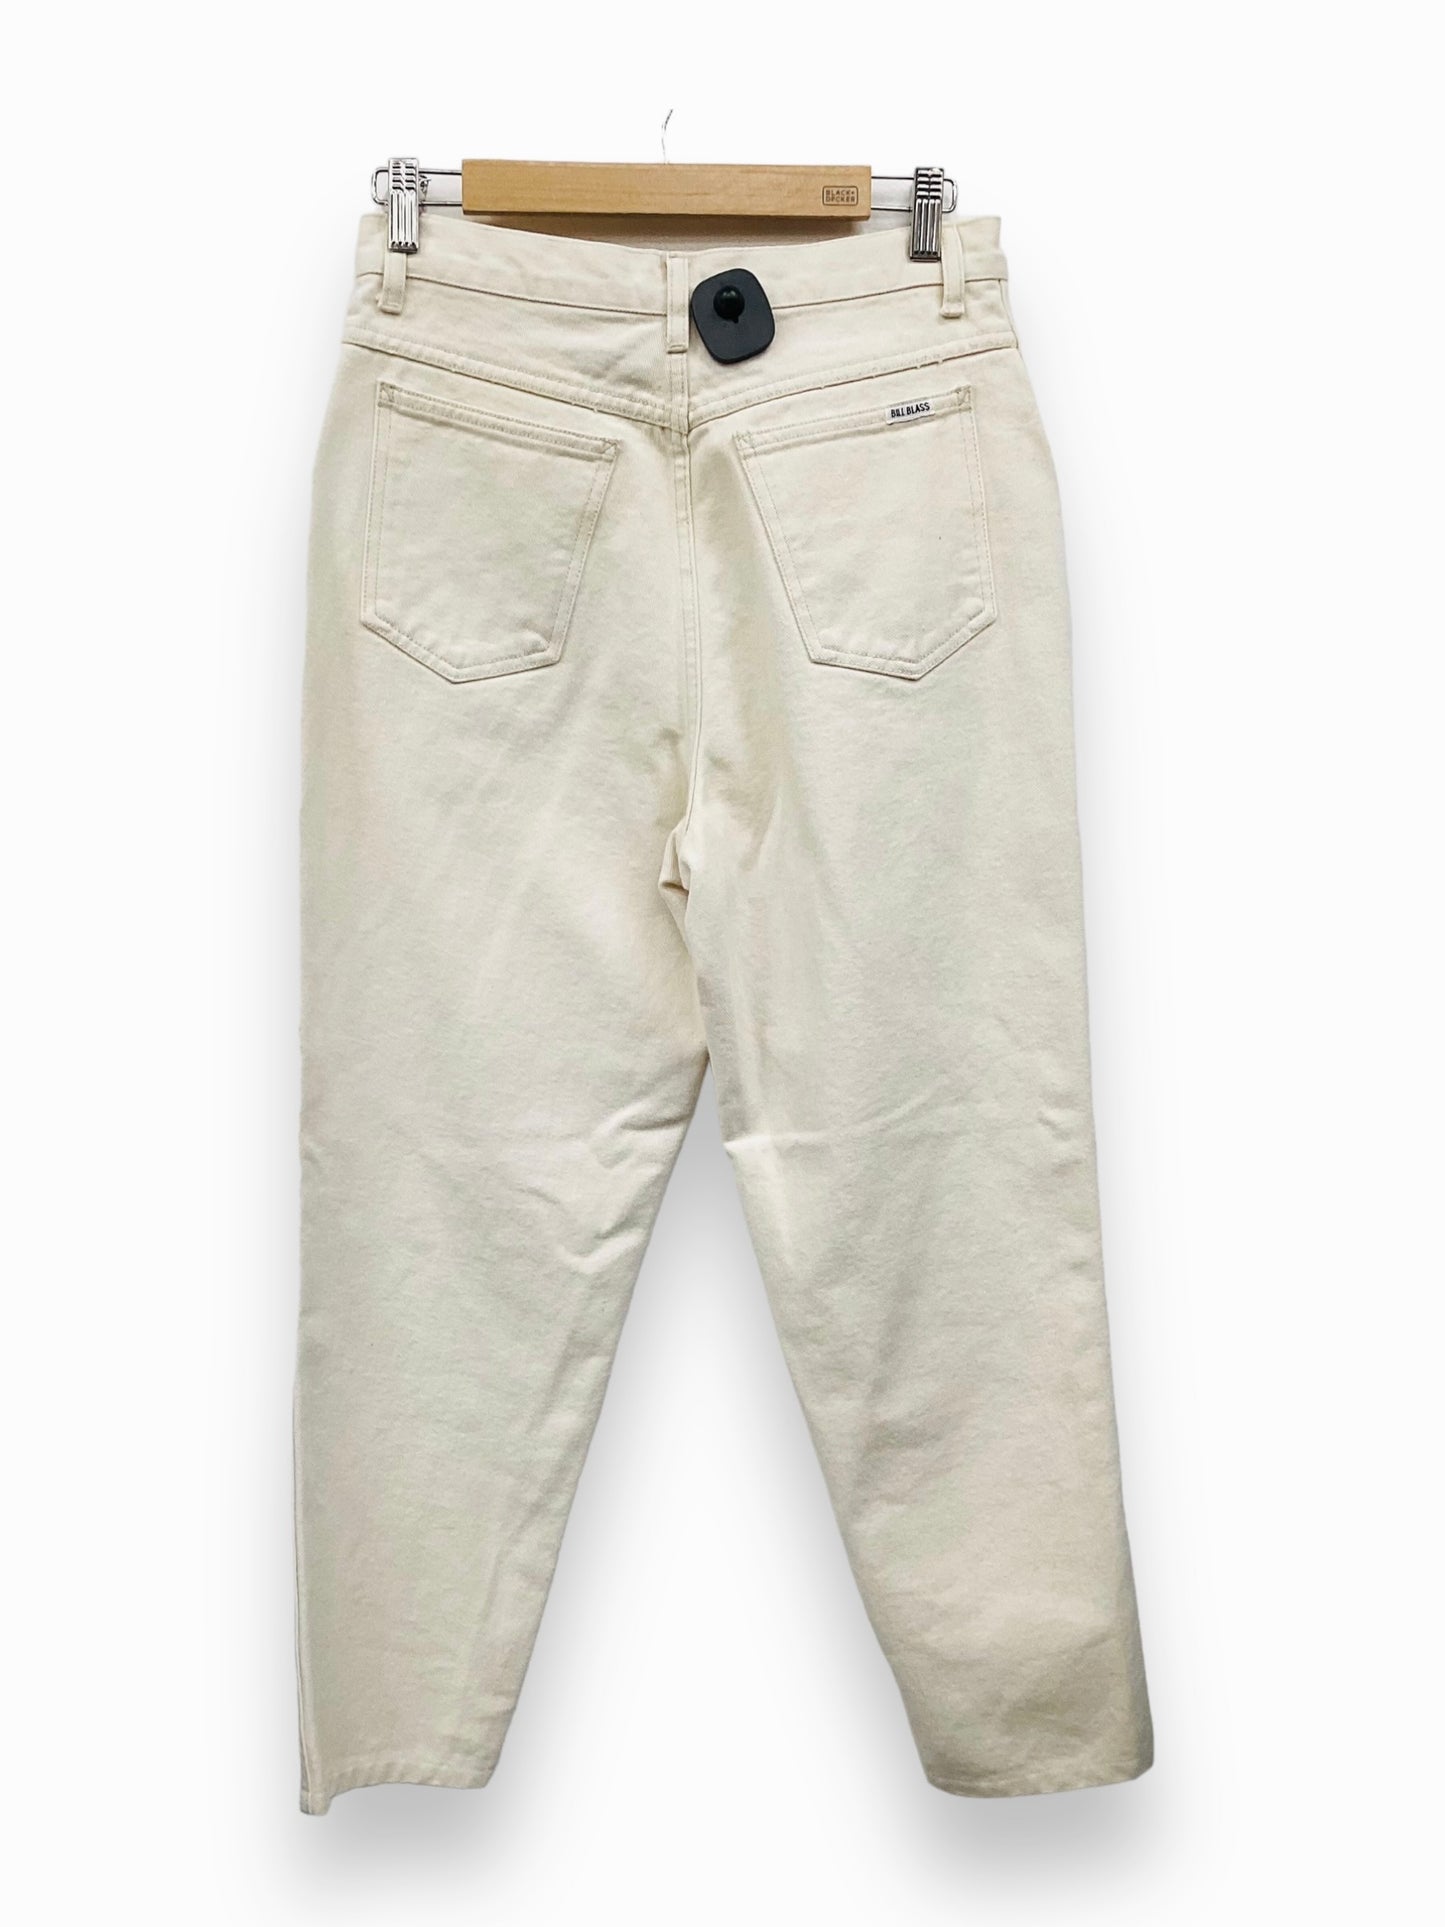 Jeans Boot Cut By Bill Blass  Size: 10